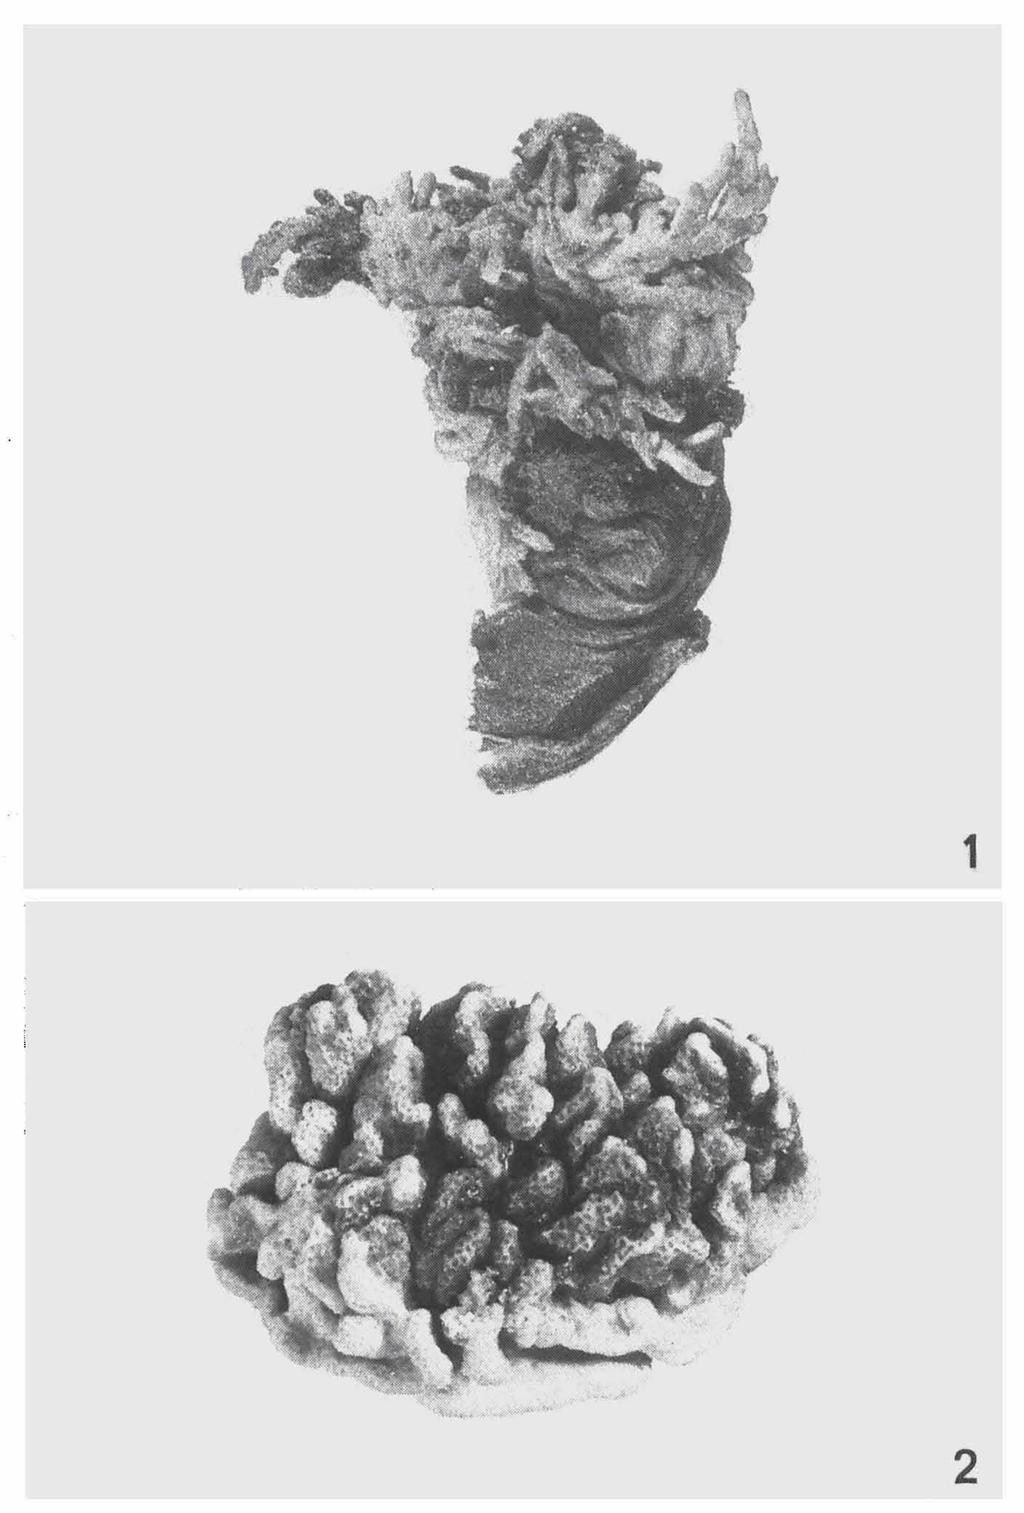 ZOOLOGISCHE VERHANDELINGEN 150 (1977) PL. 8 Fig. I. Sinularia sandensis sp. nov.